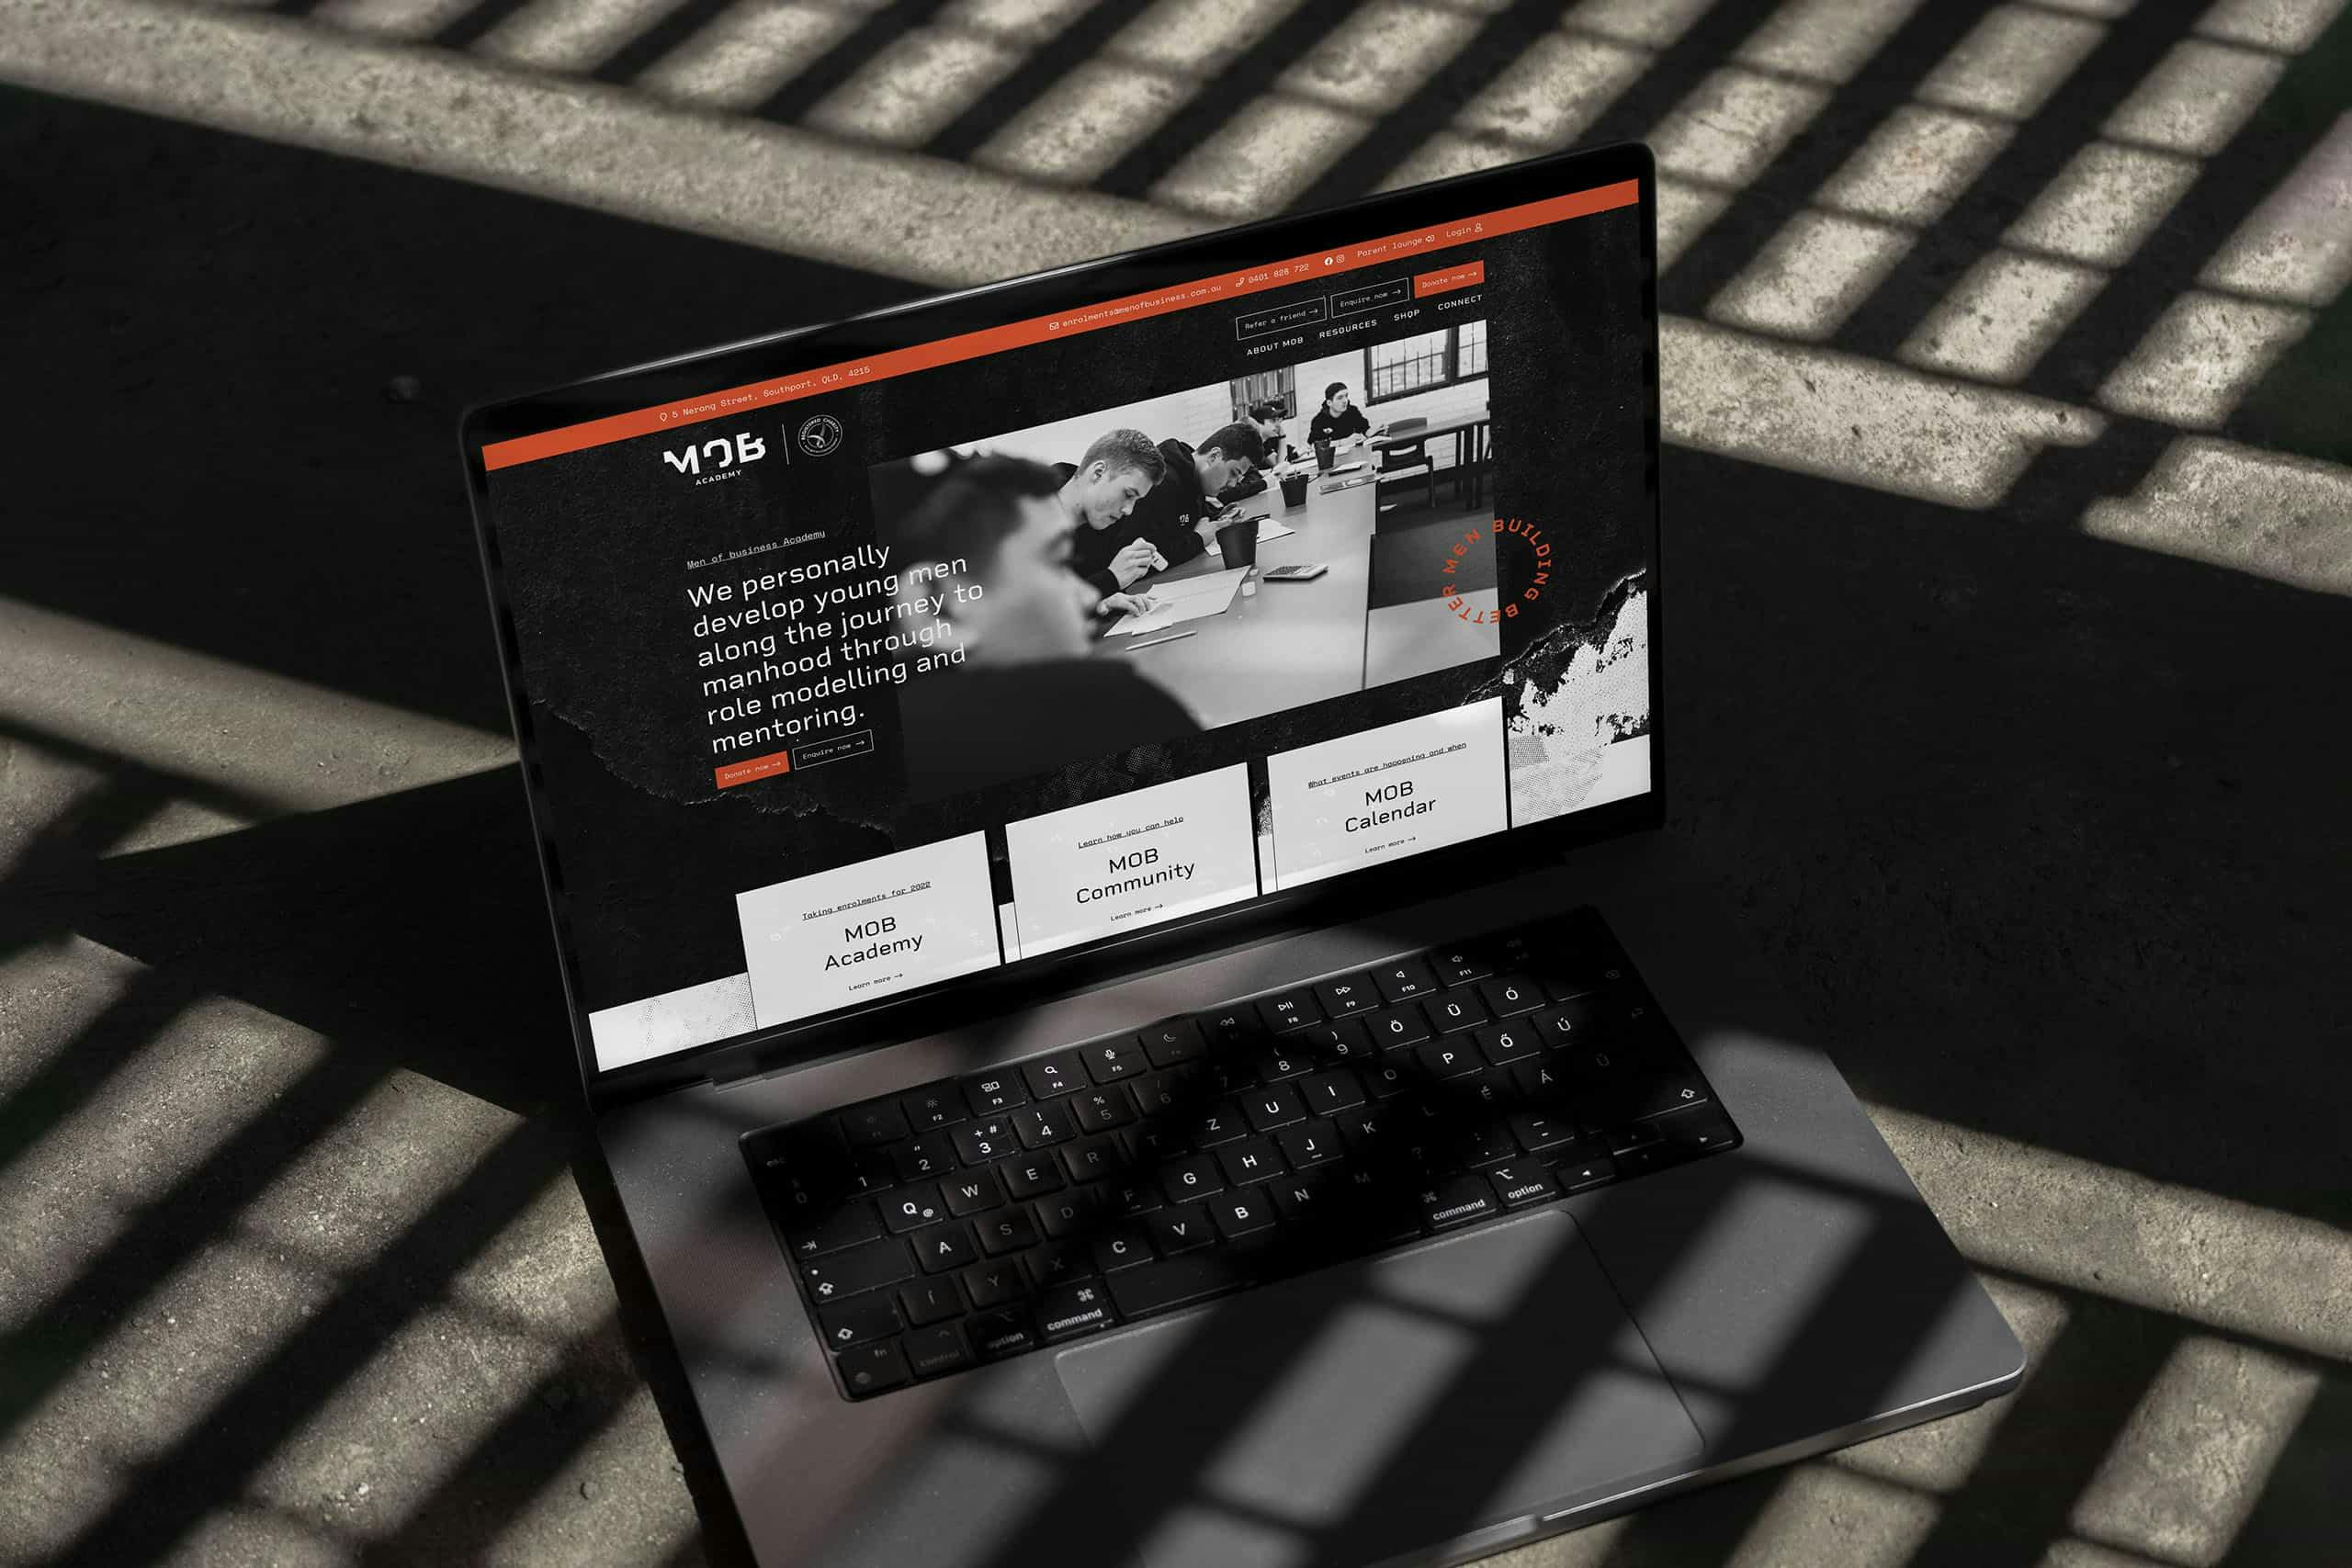 Men of Business website displayed on a laptop